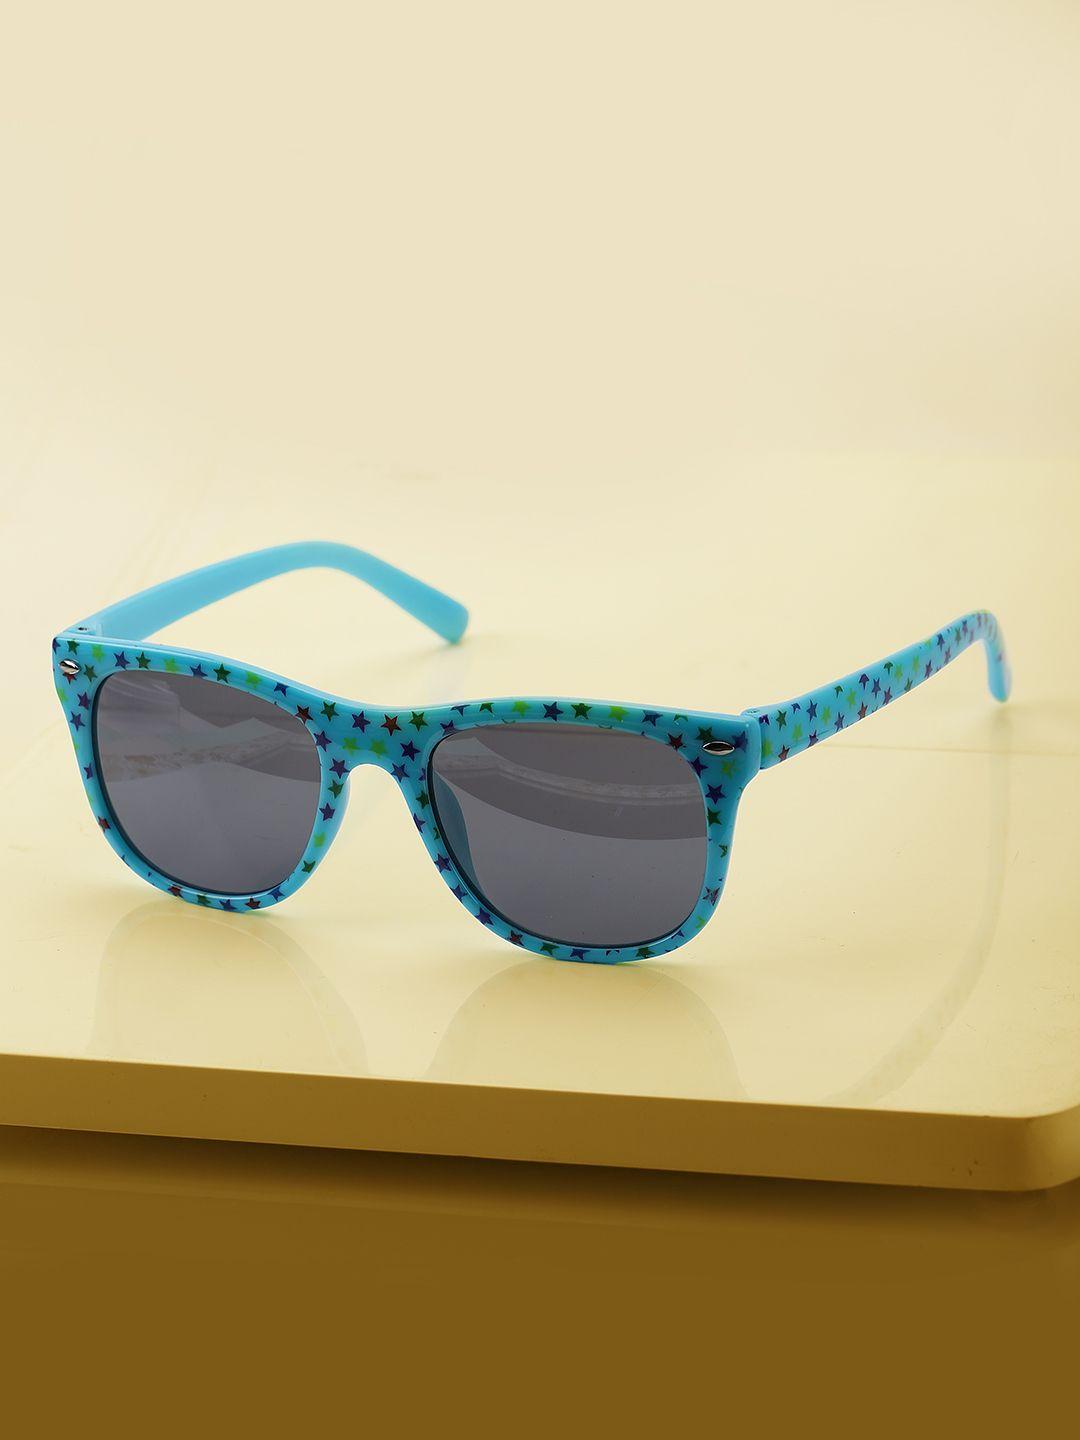 Carlton London Boys Black Lens & Blue Wayfarer Sunglasses